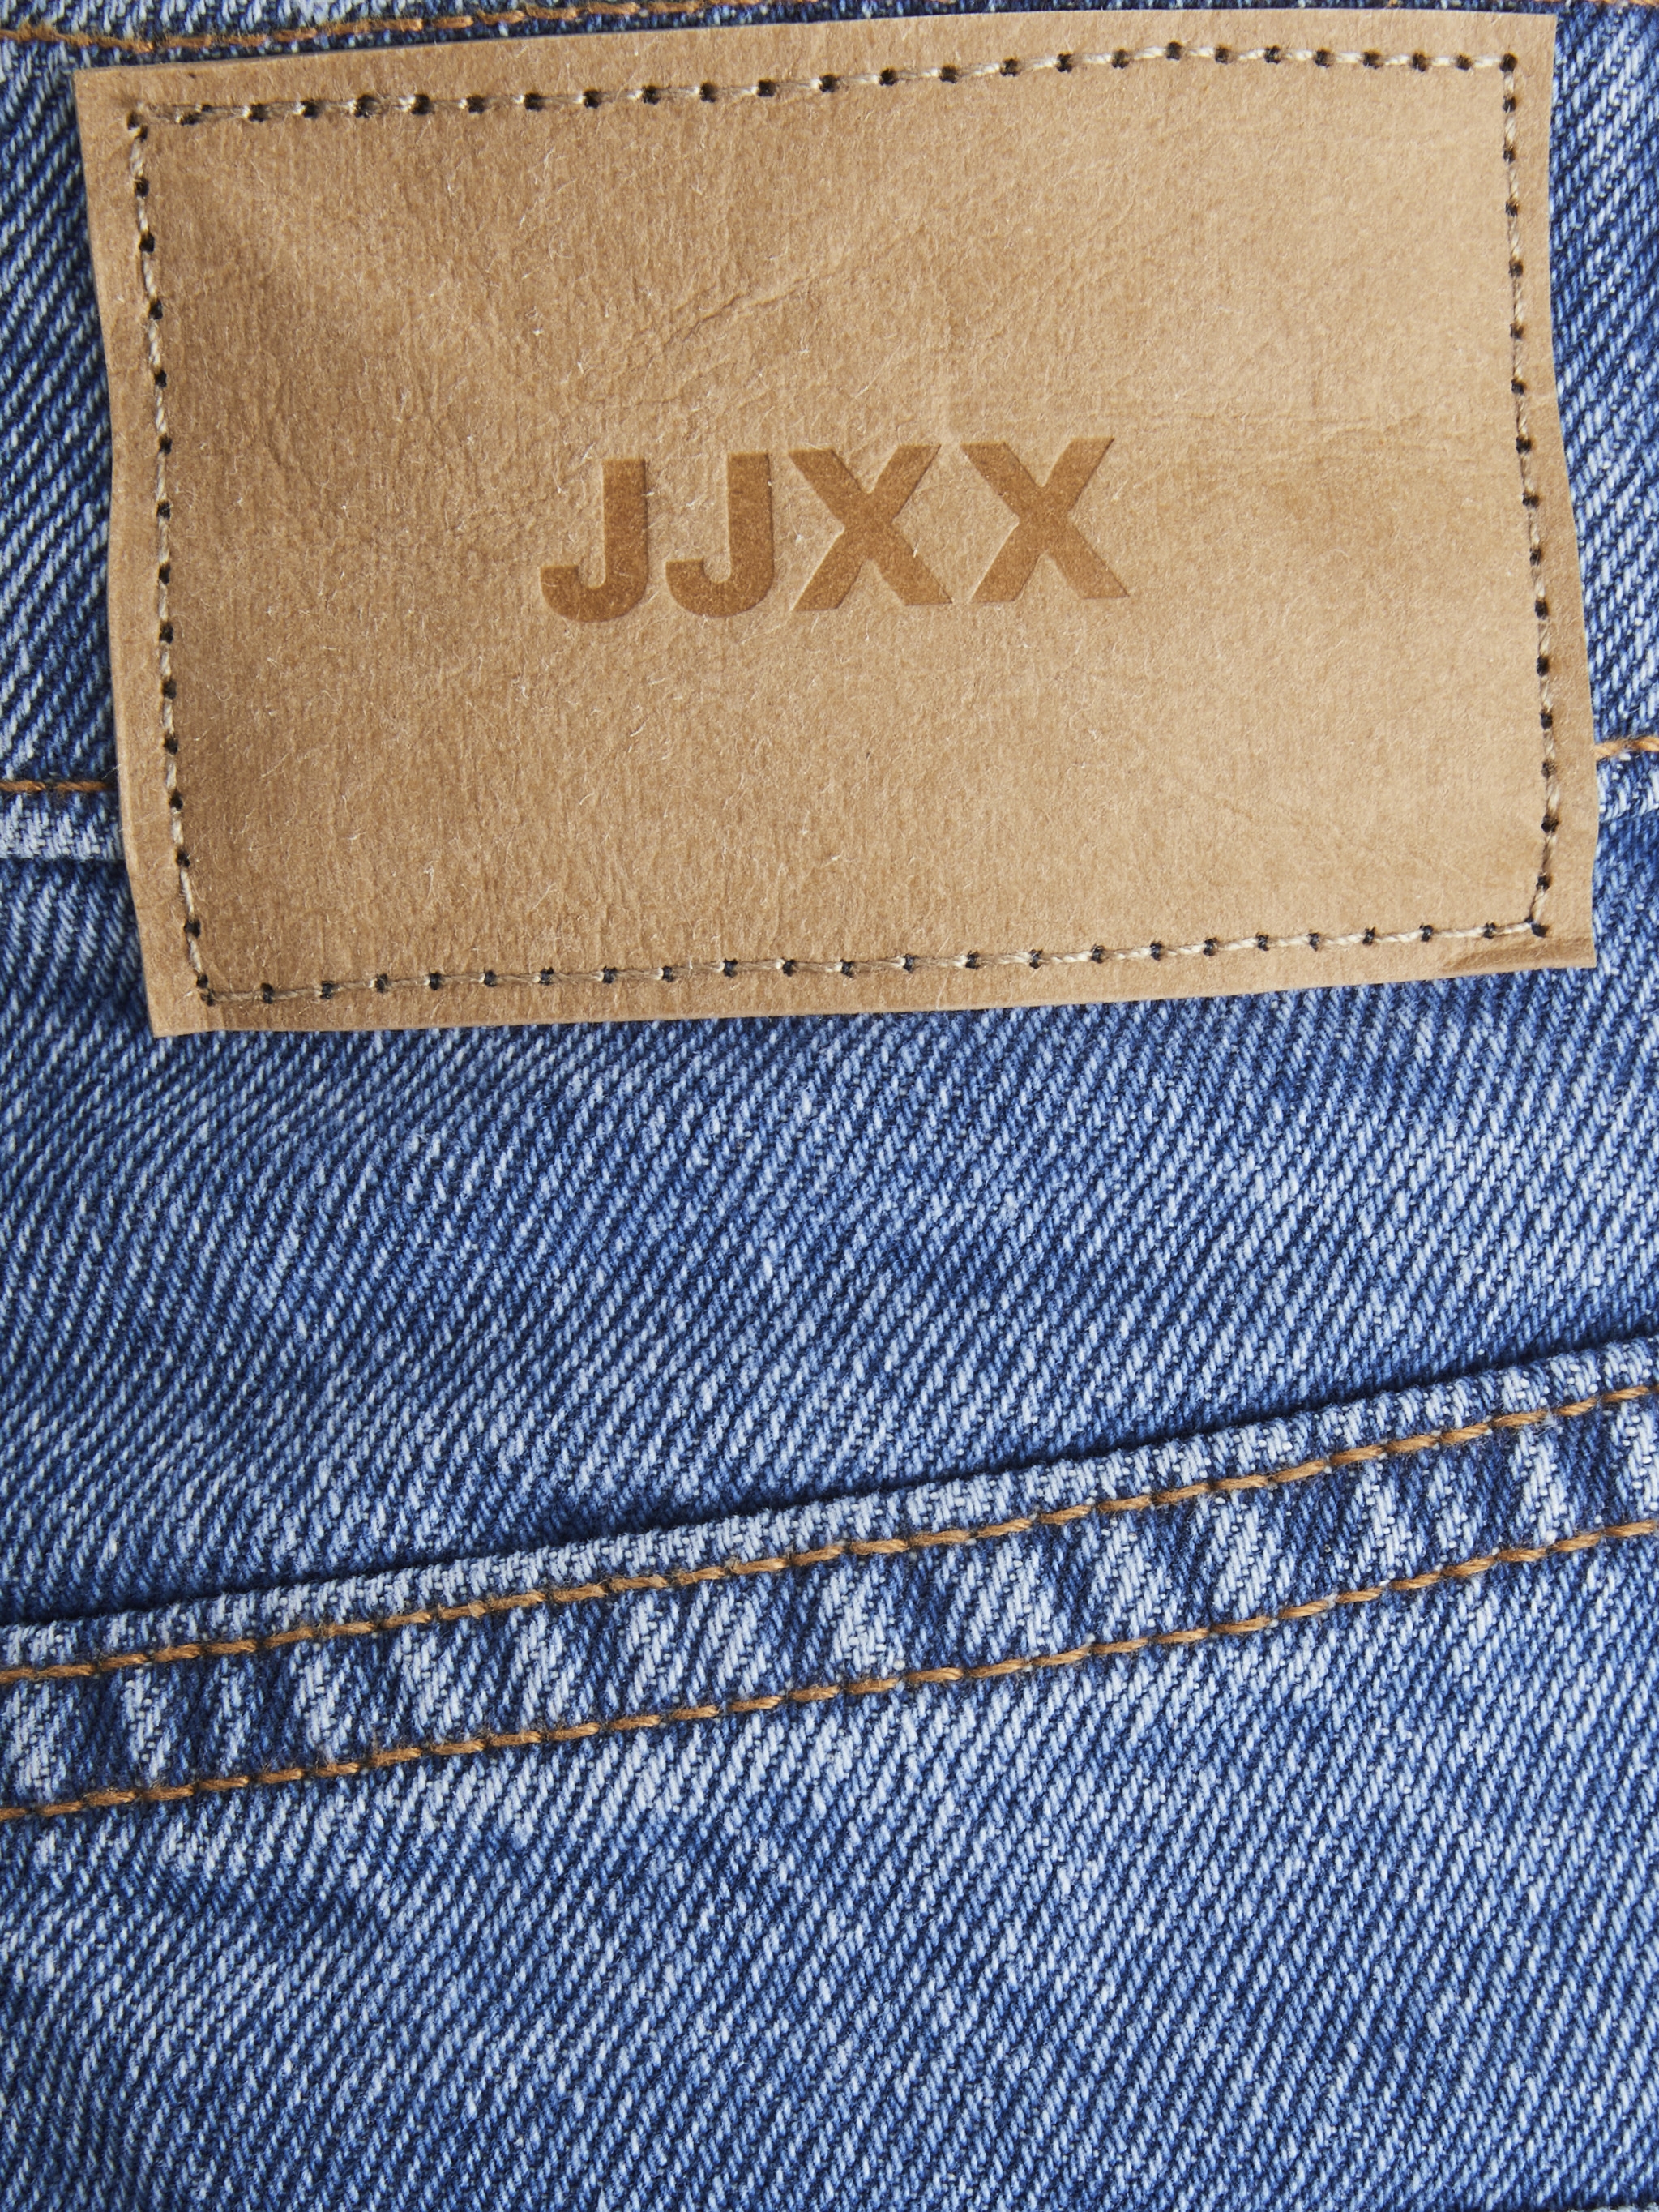 JJXX Jeans Tokyo in Blau 